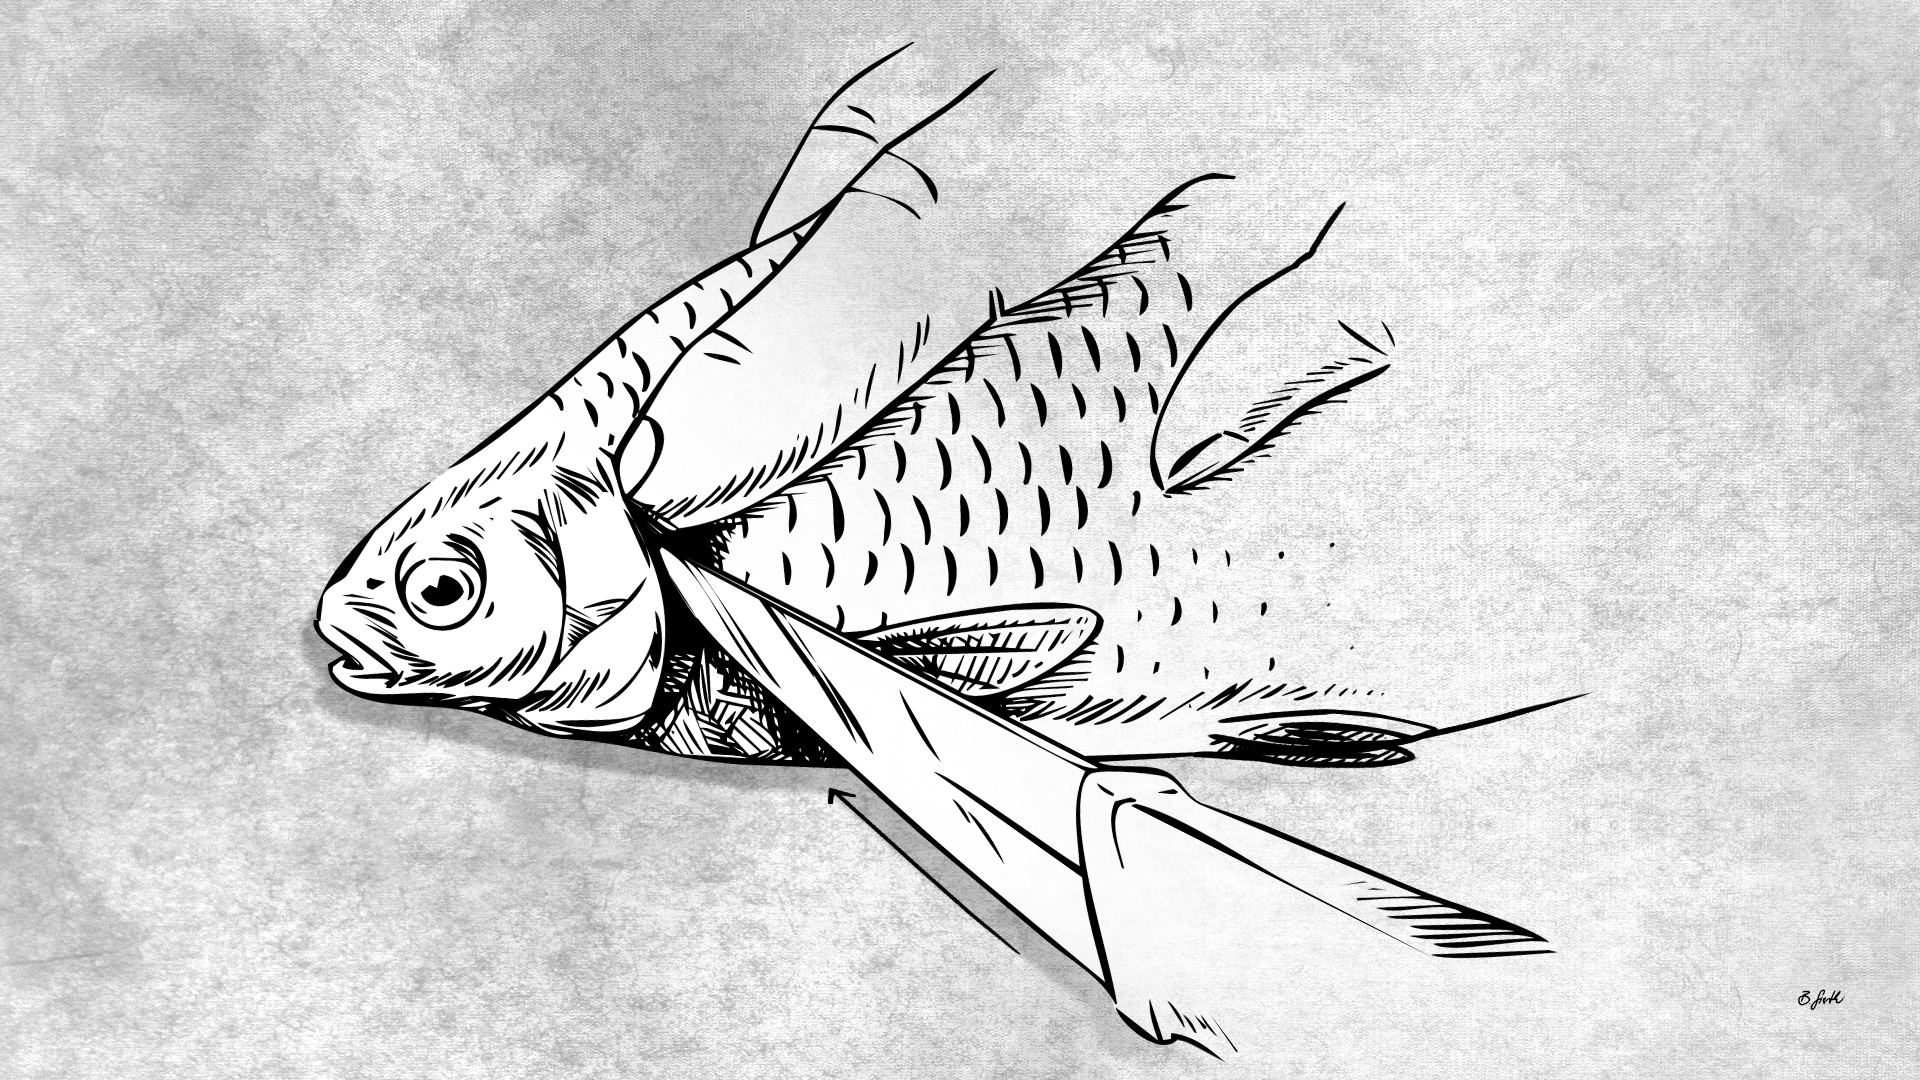 Fisch töten durch Kiemenschnitt